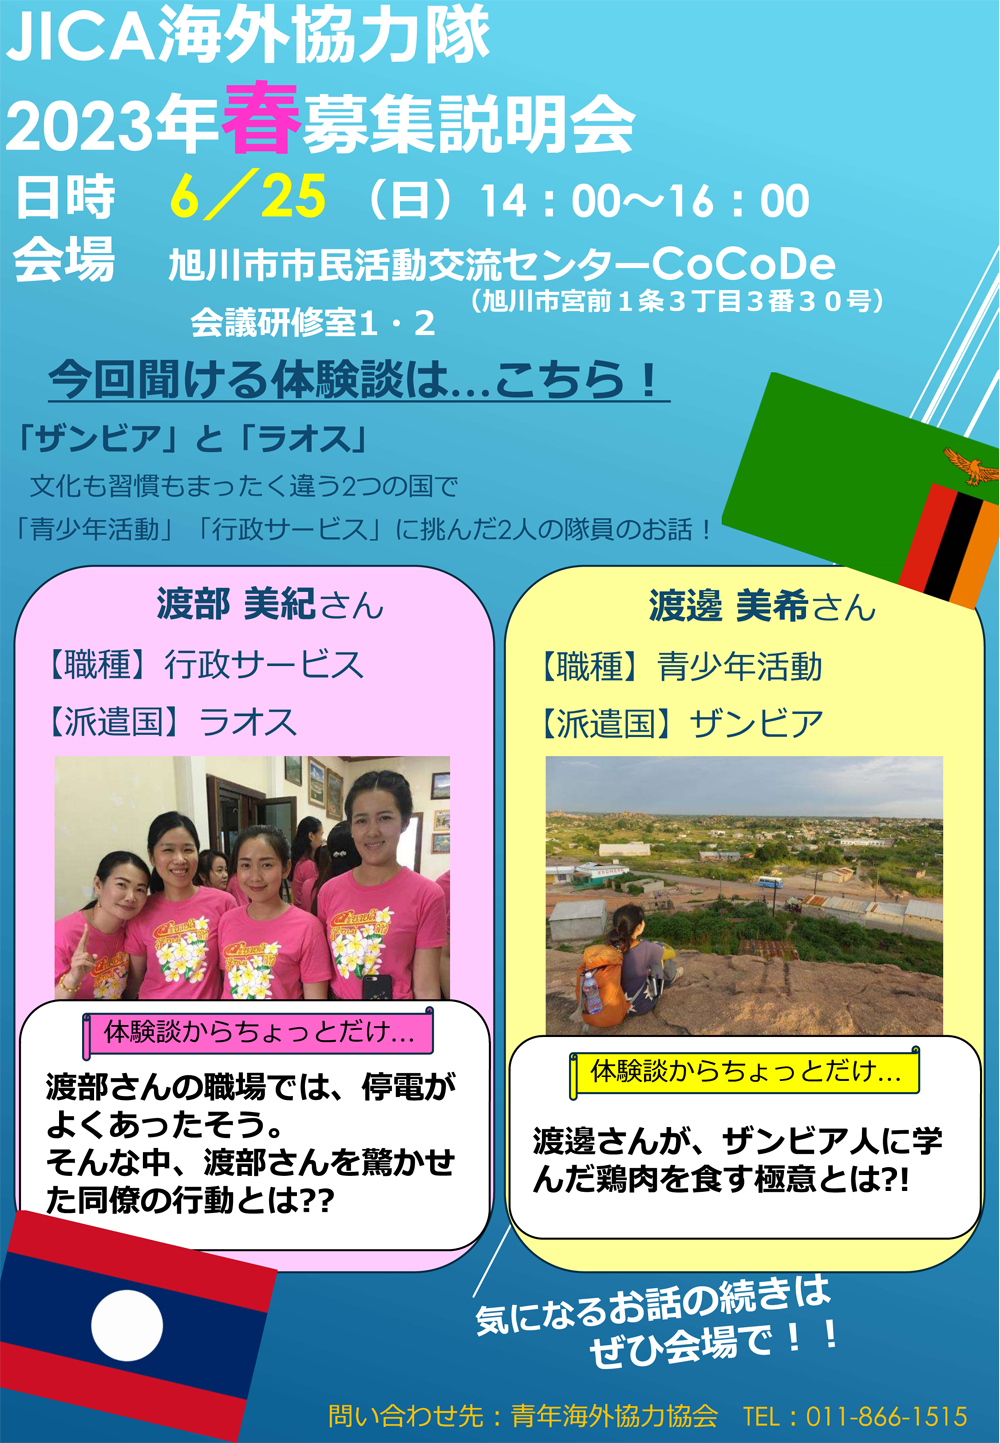 http://asahikawaic.jp/information/images/20230625.jpg